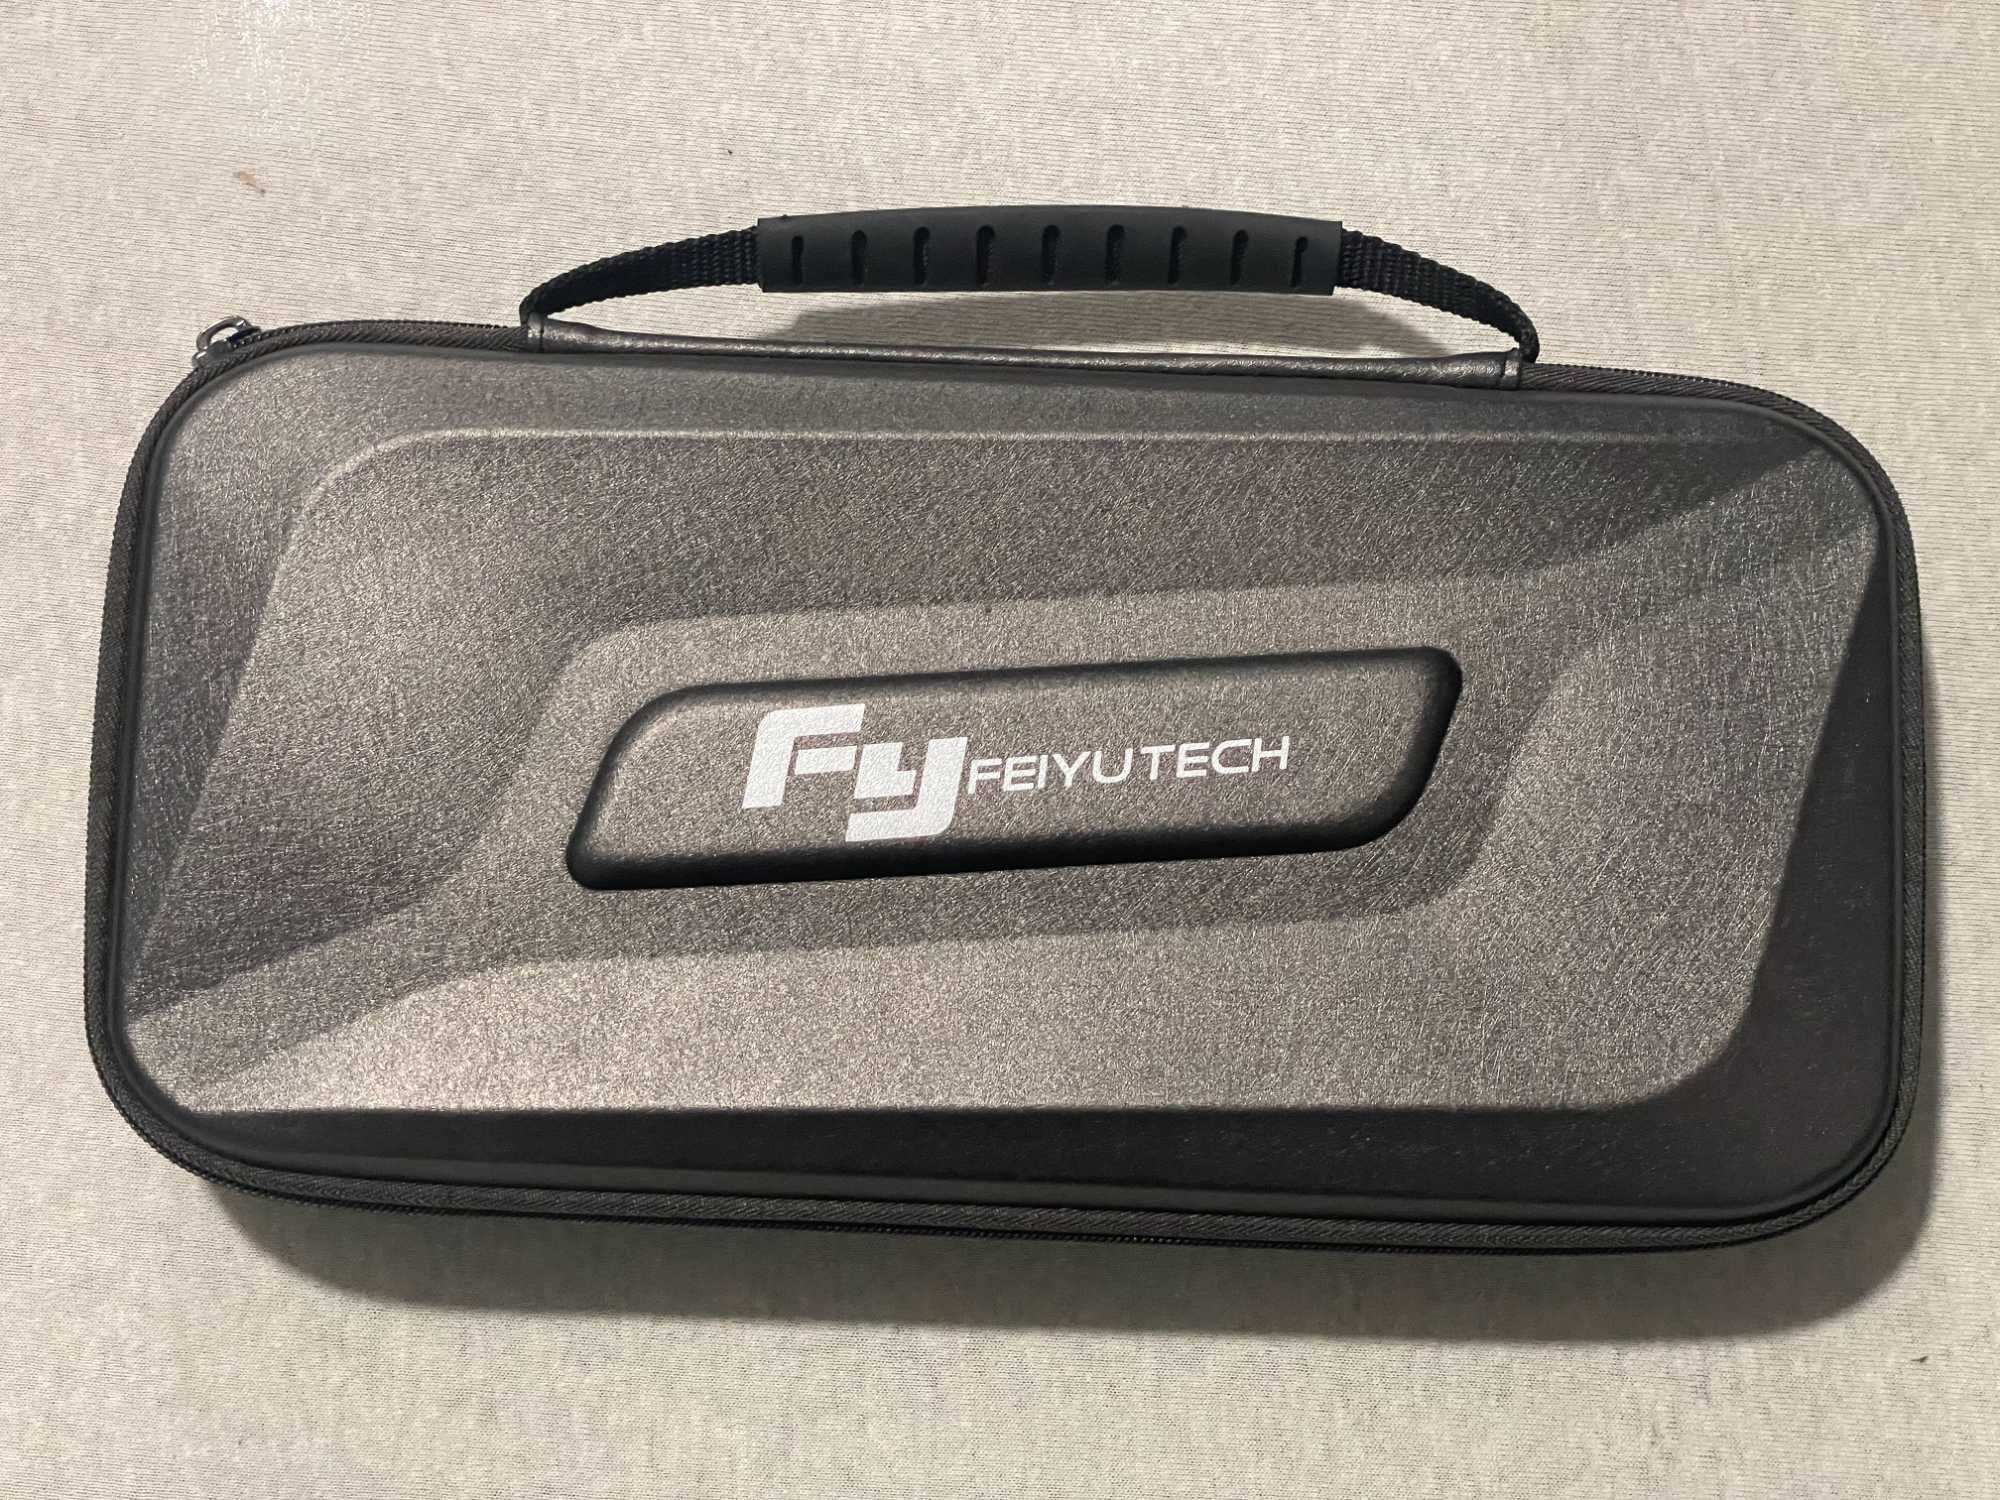 FeiYuTech G6 - gimbal